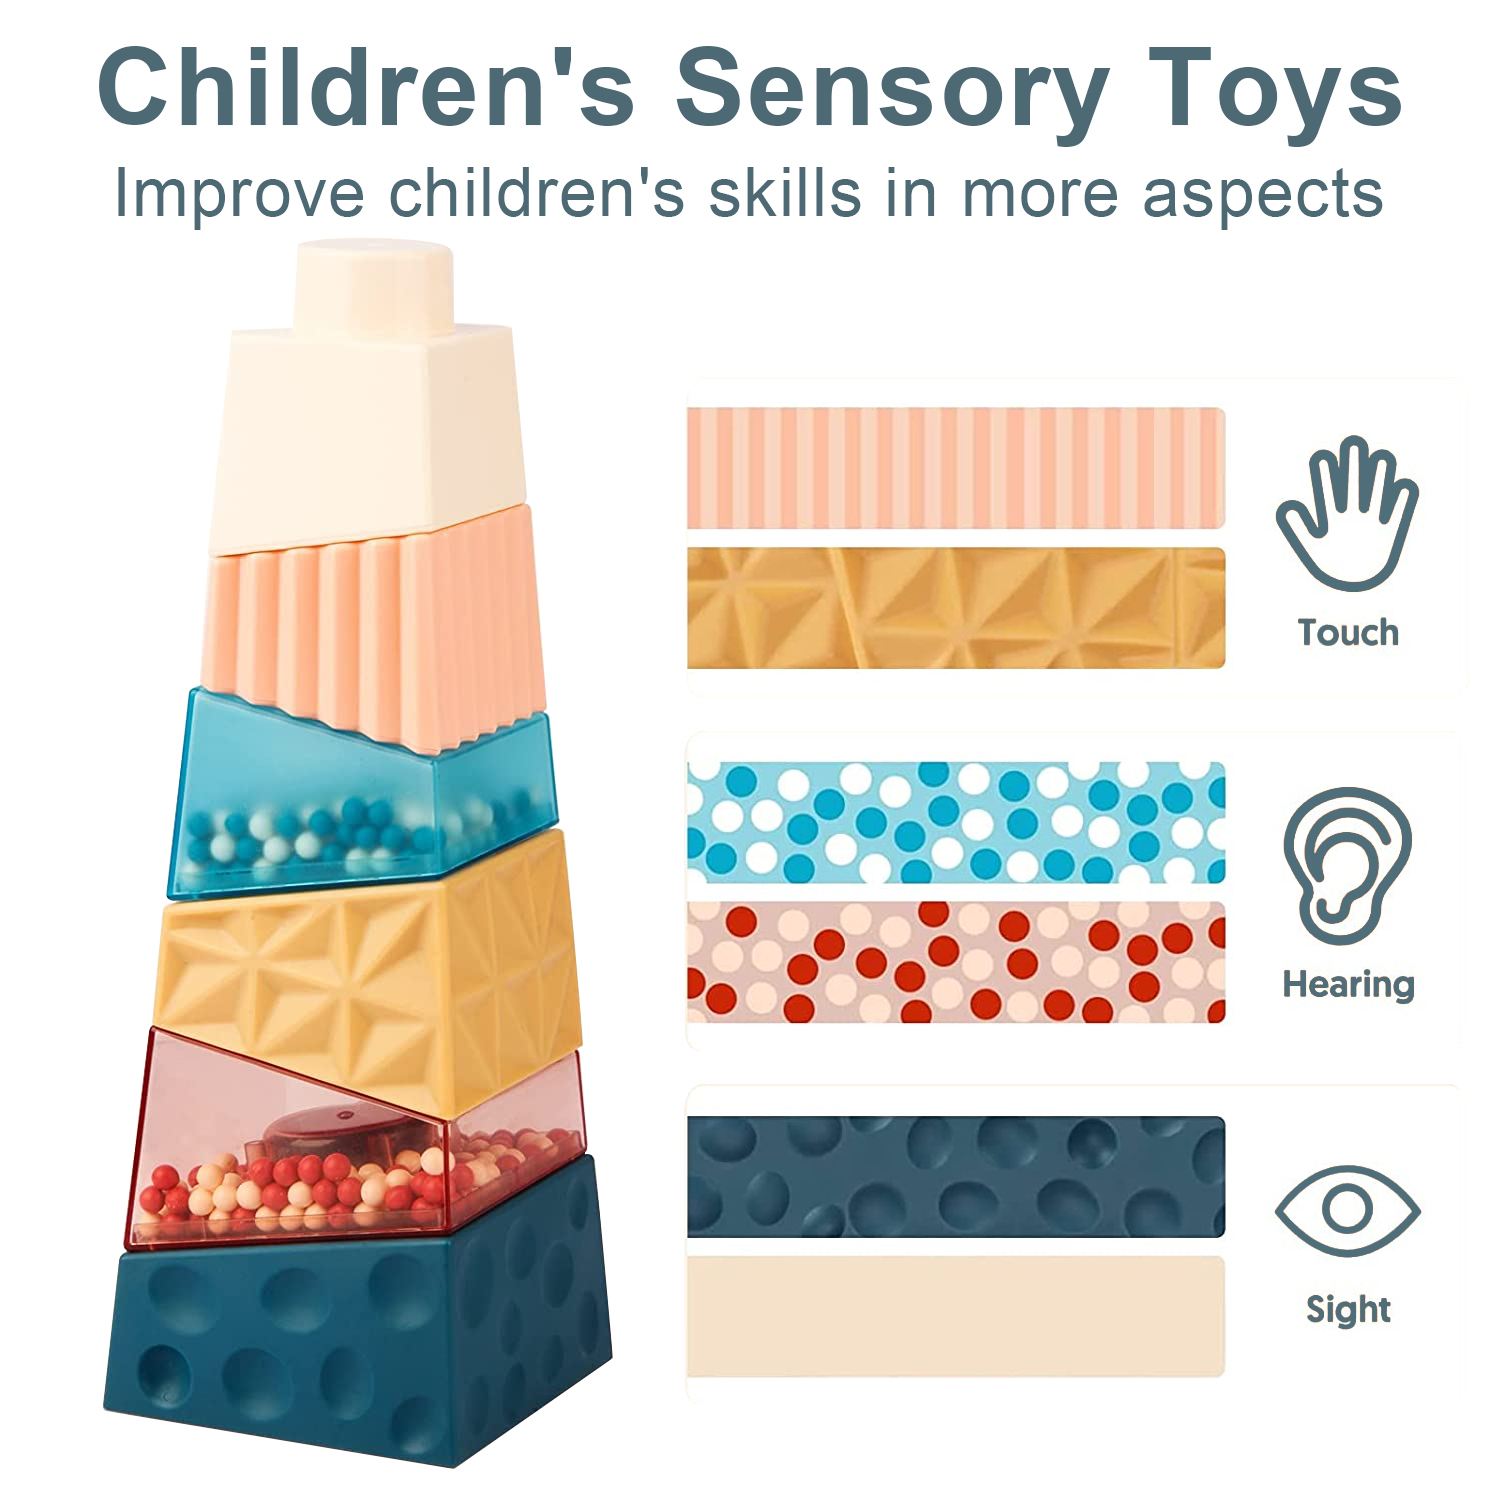 Montessori Stacking Blocks for Toddlers